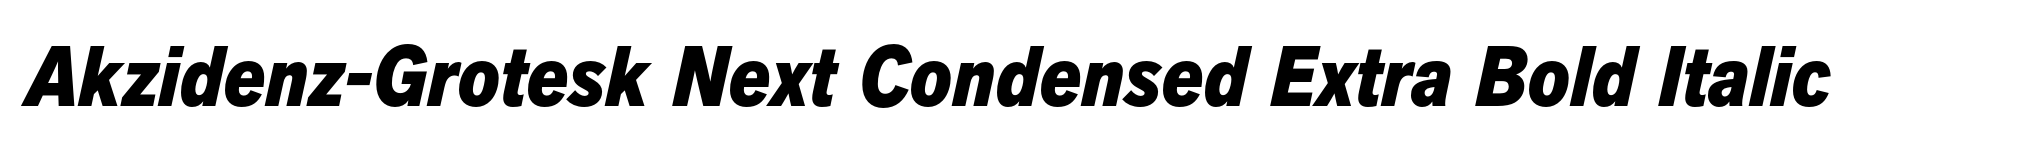 Akzidenz-Grotesk Next Condensed Extra Bold Italic image